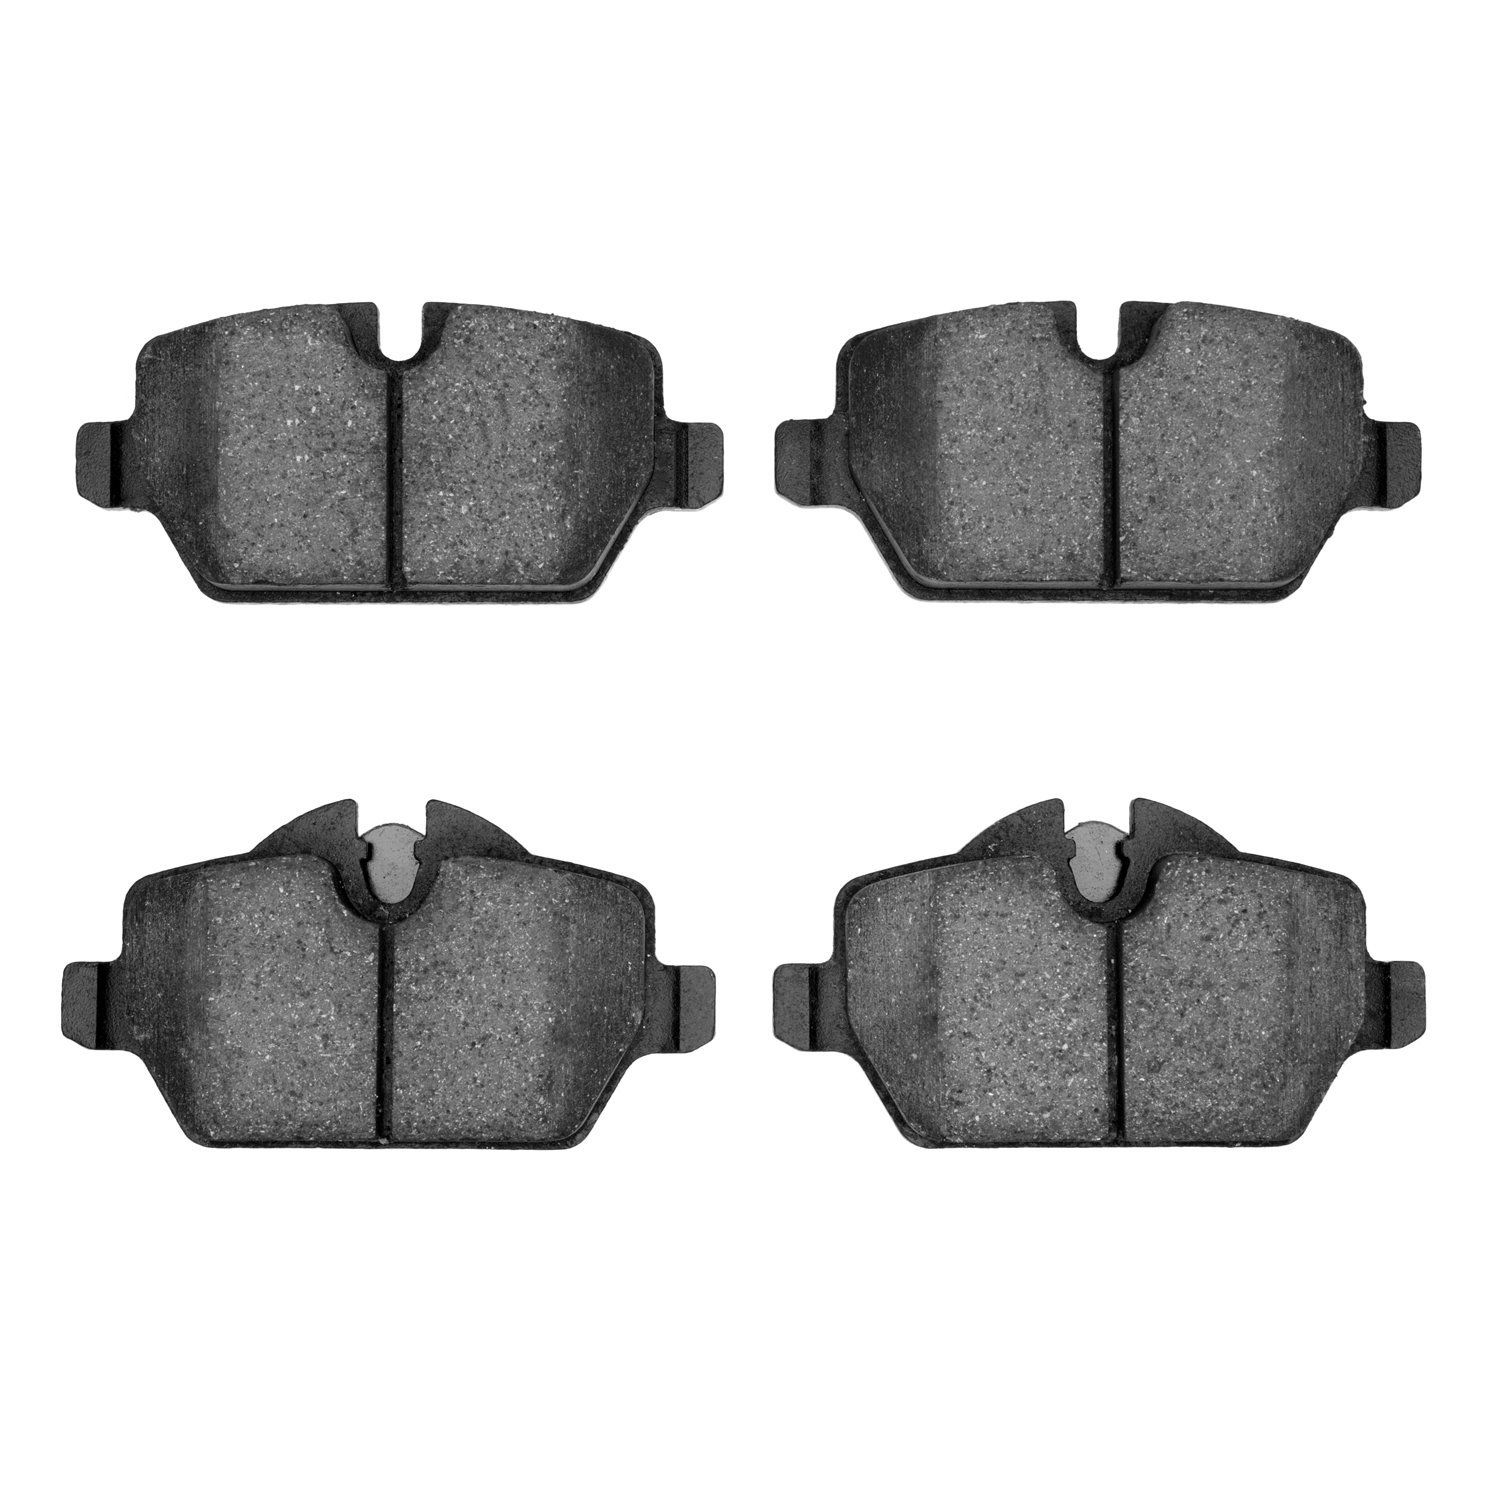 1600-1226-00 5000 Euro Ceramic Brake Pads, 2005-2016 Multiple Makes/Models, Position: Rear